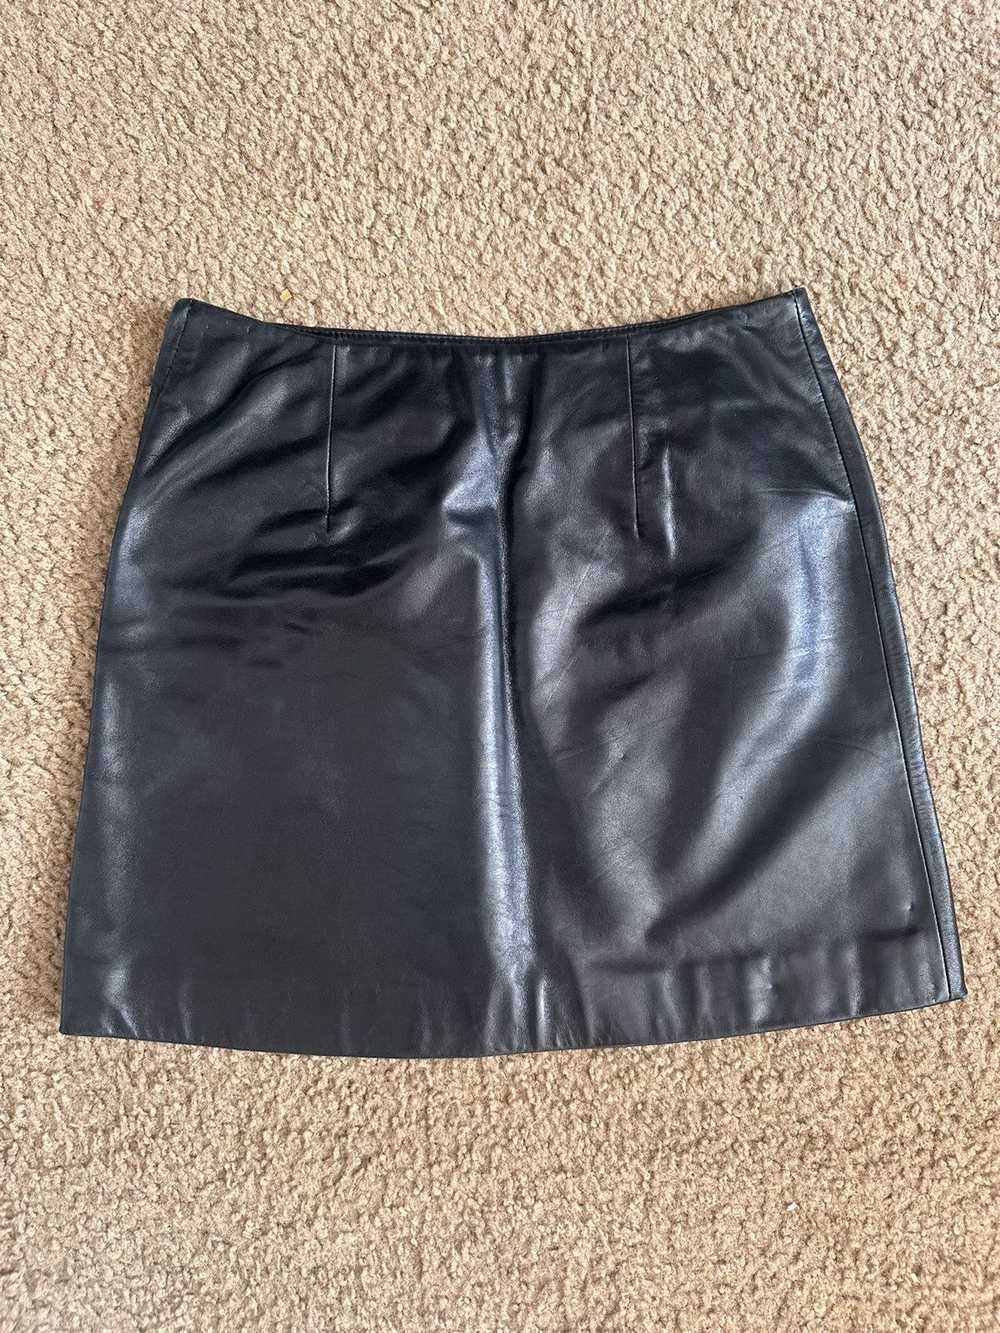 Guess Vintage 90’s Guess Black mini skirt - image 3